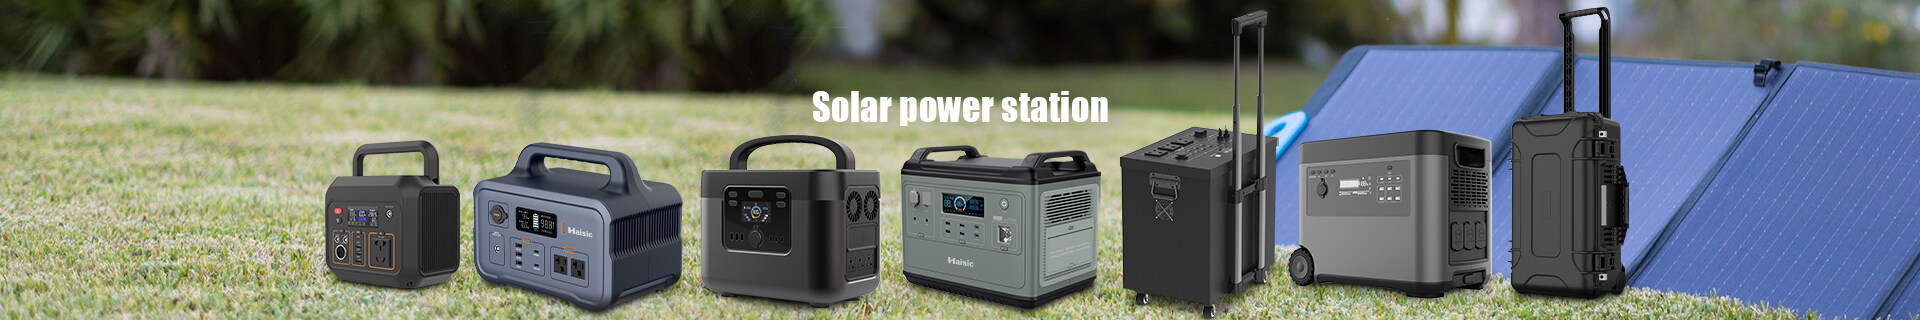 power source solar generators, solar generator company